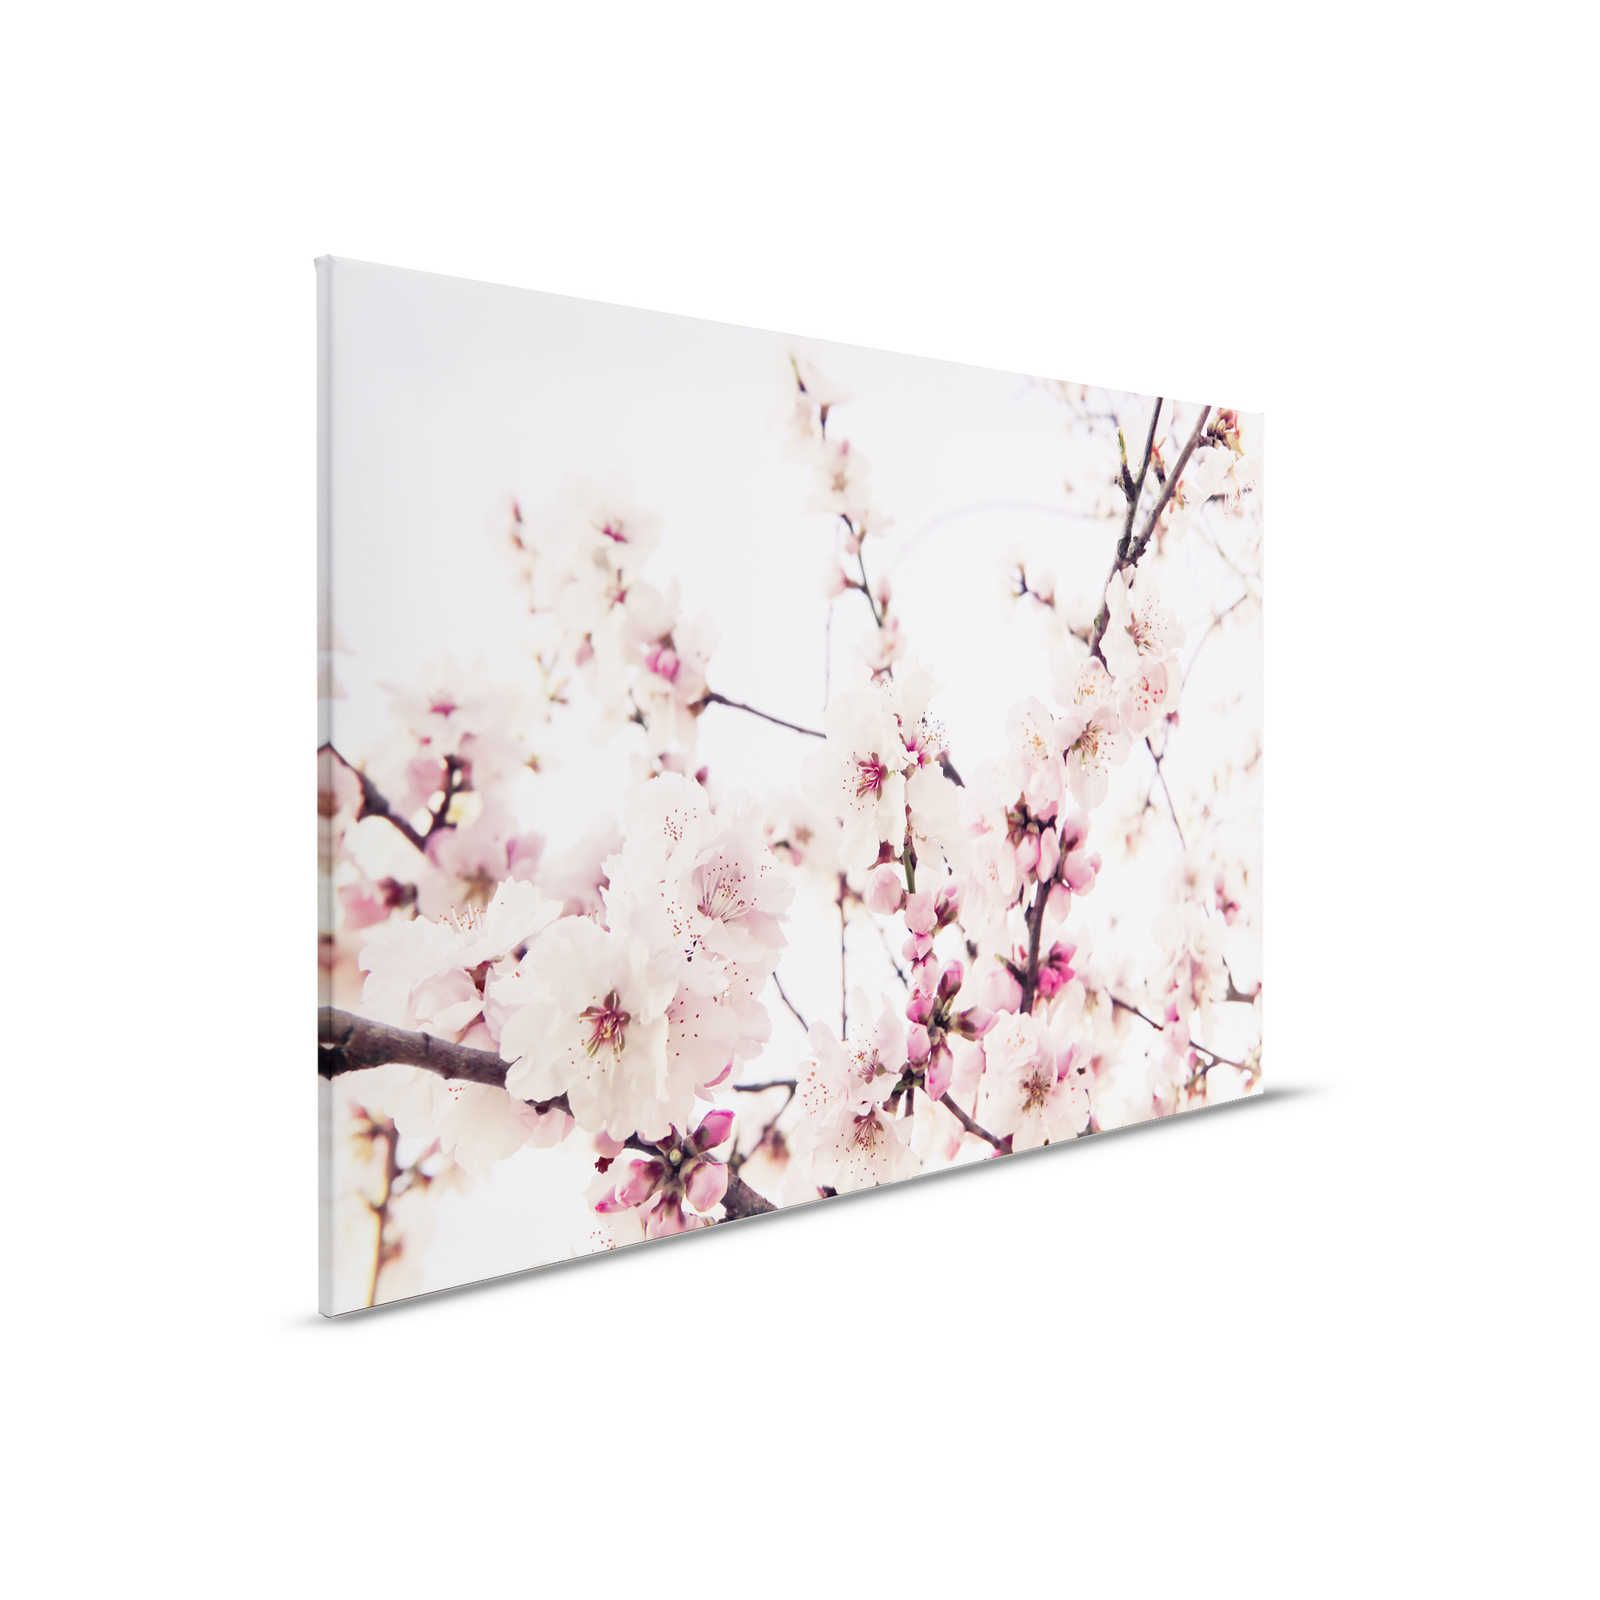 Natur Leinwandbild mit Kirschblüten – 0,90 m x 0,60 m
